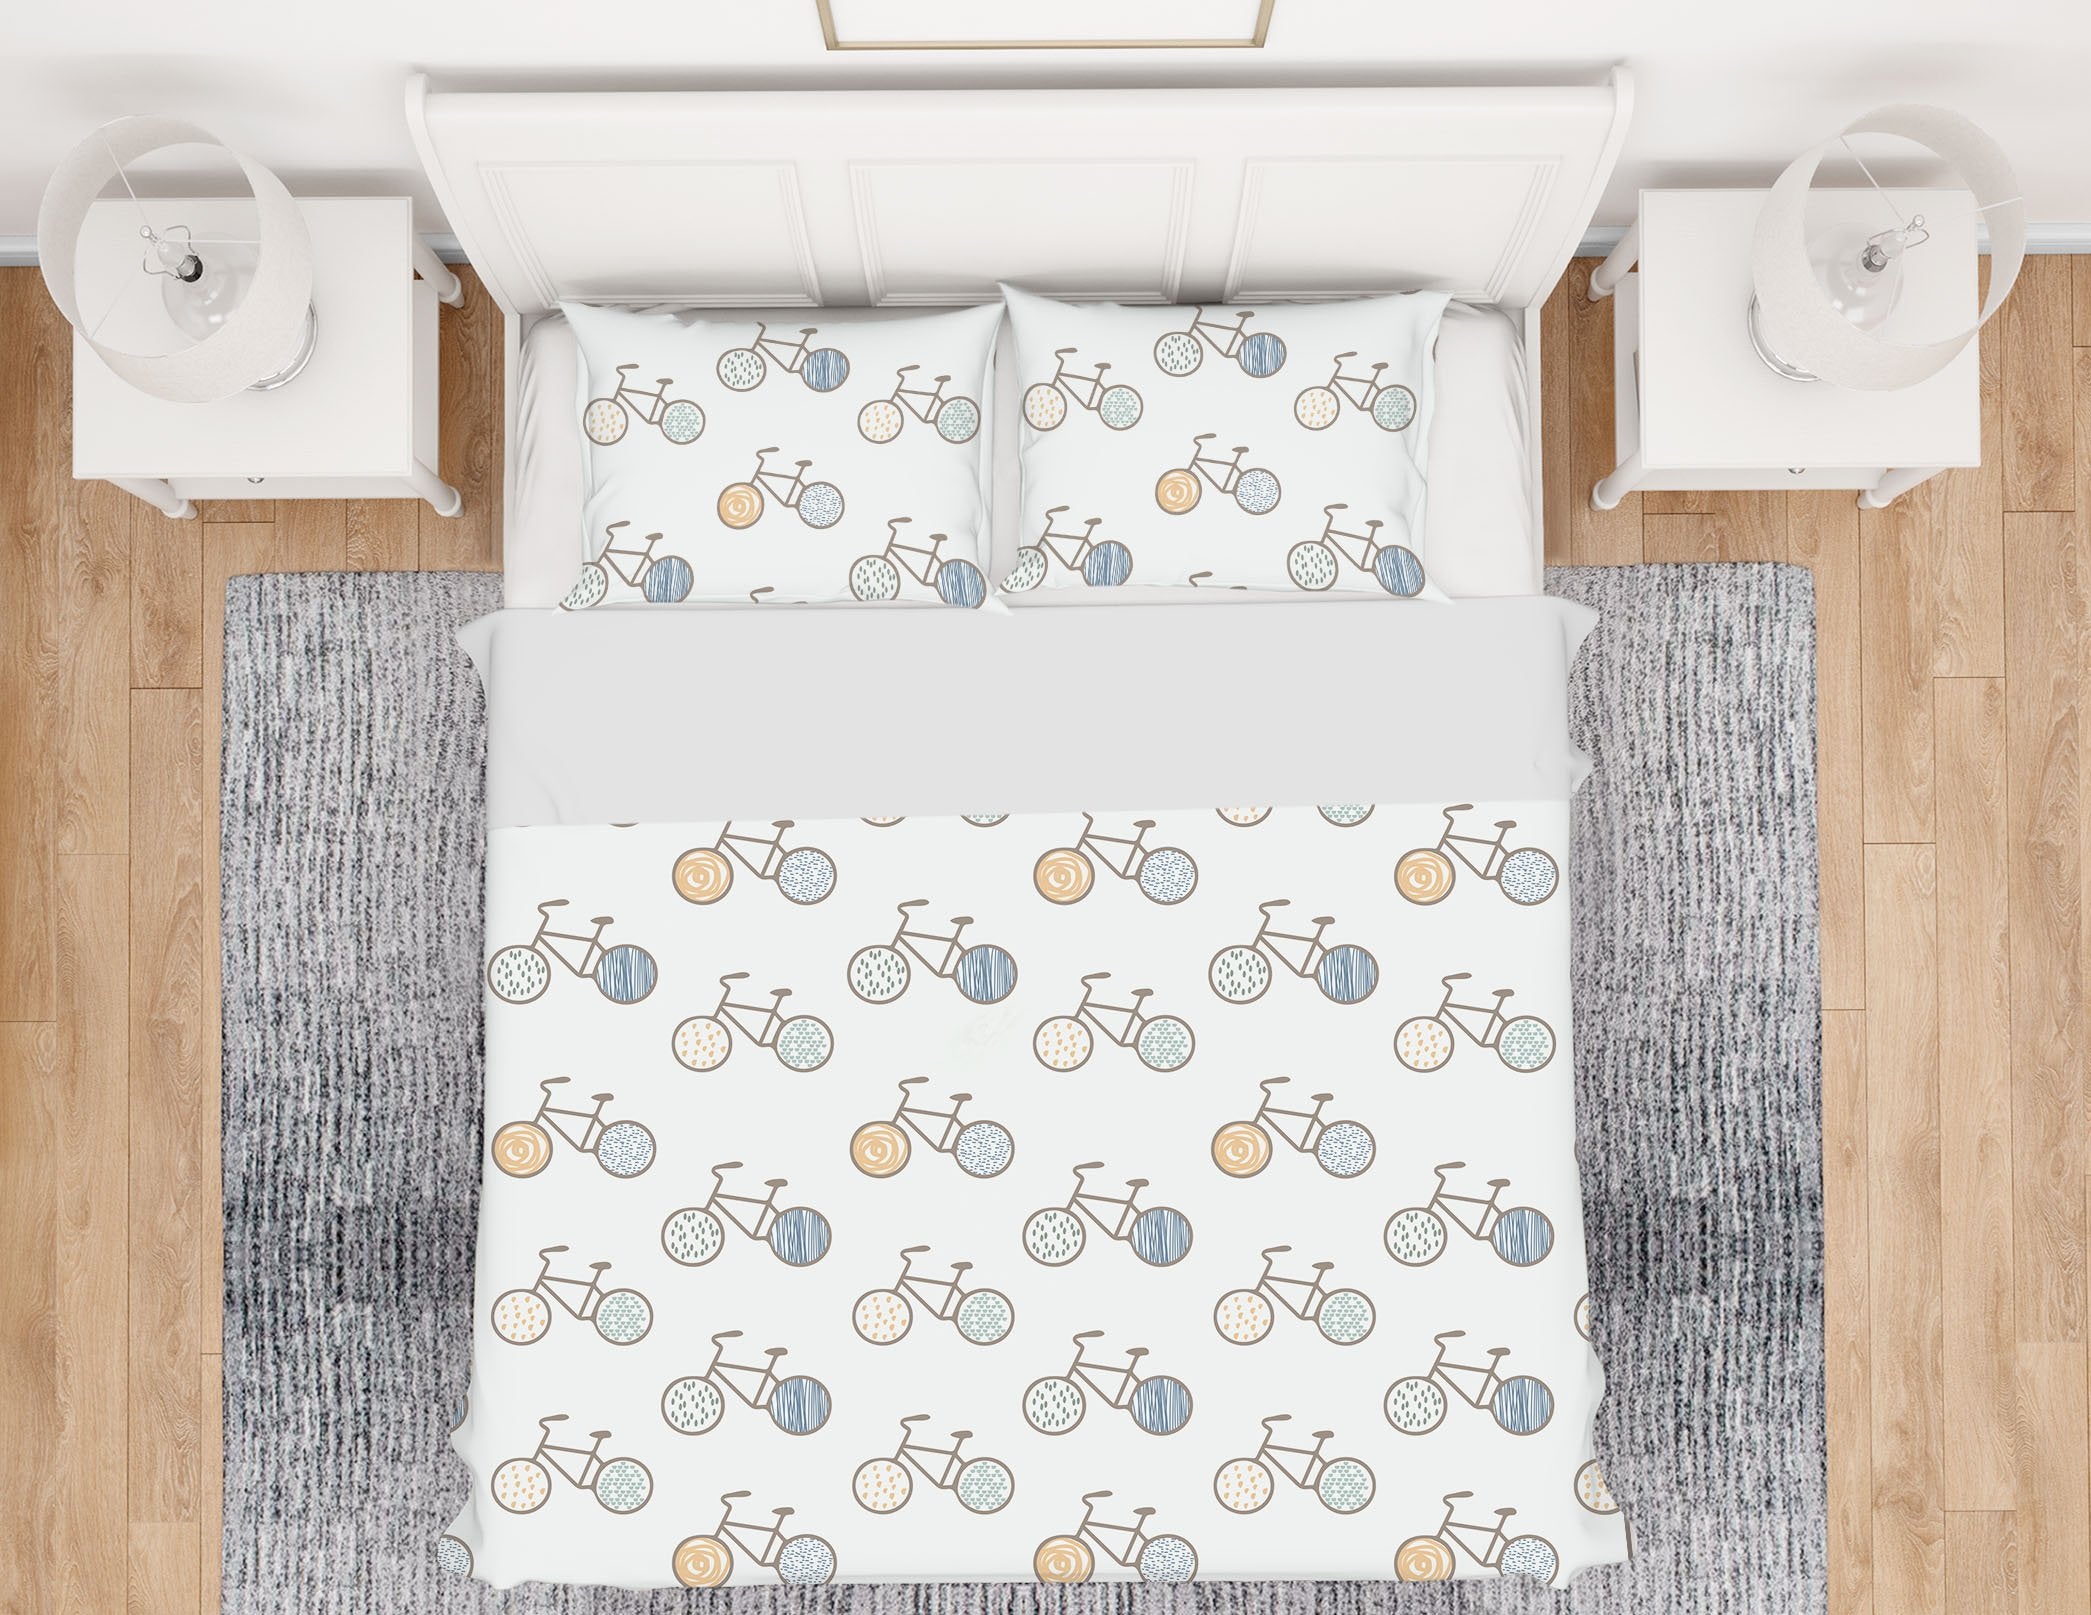 3D Bikes 2018 Jillian Helvey Bedding Bed Pillowcases Quilt Quiet Covers AJ Creativity Home 